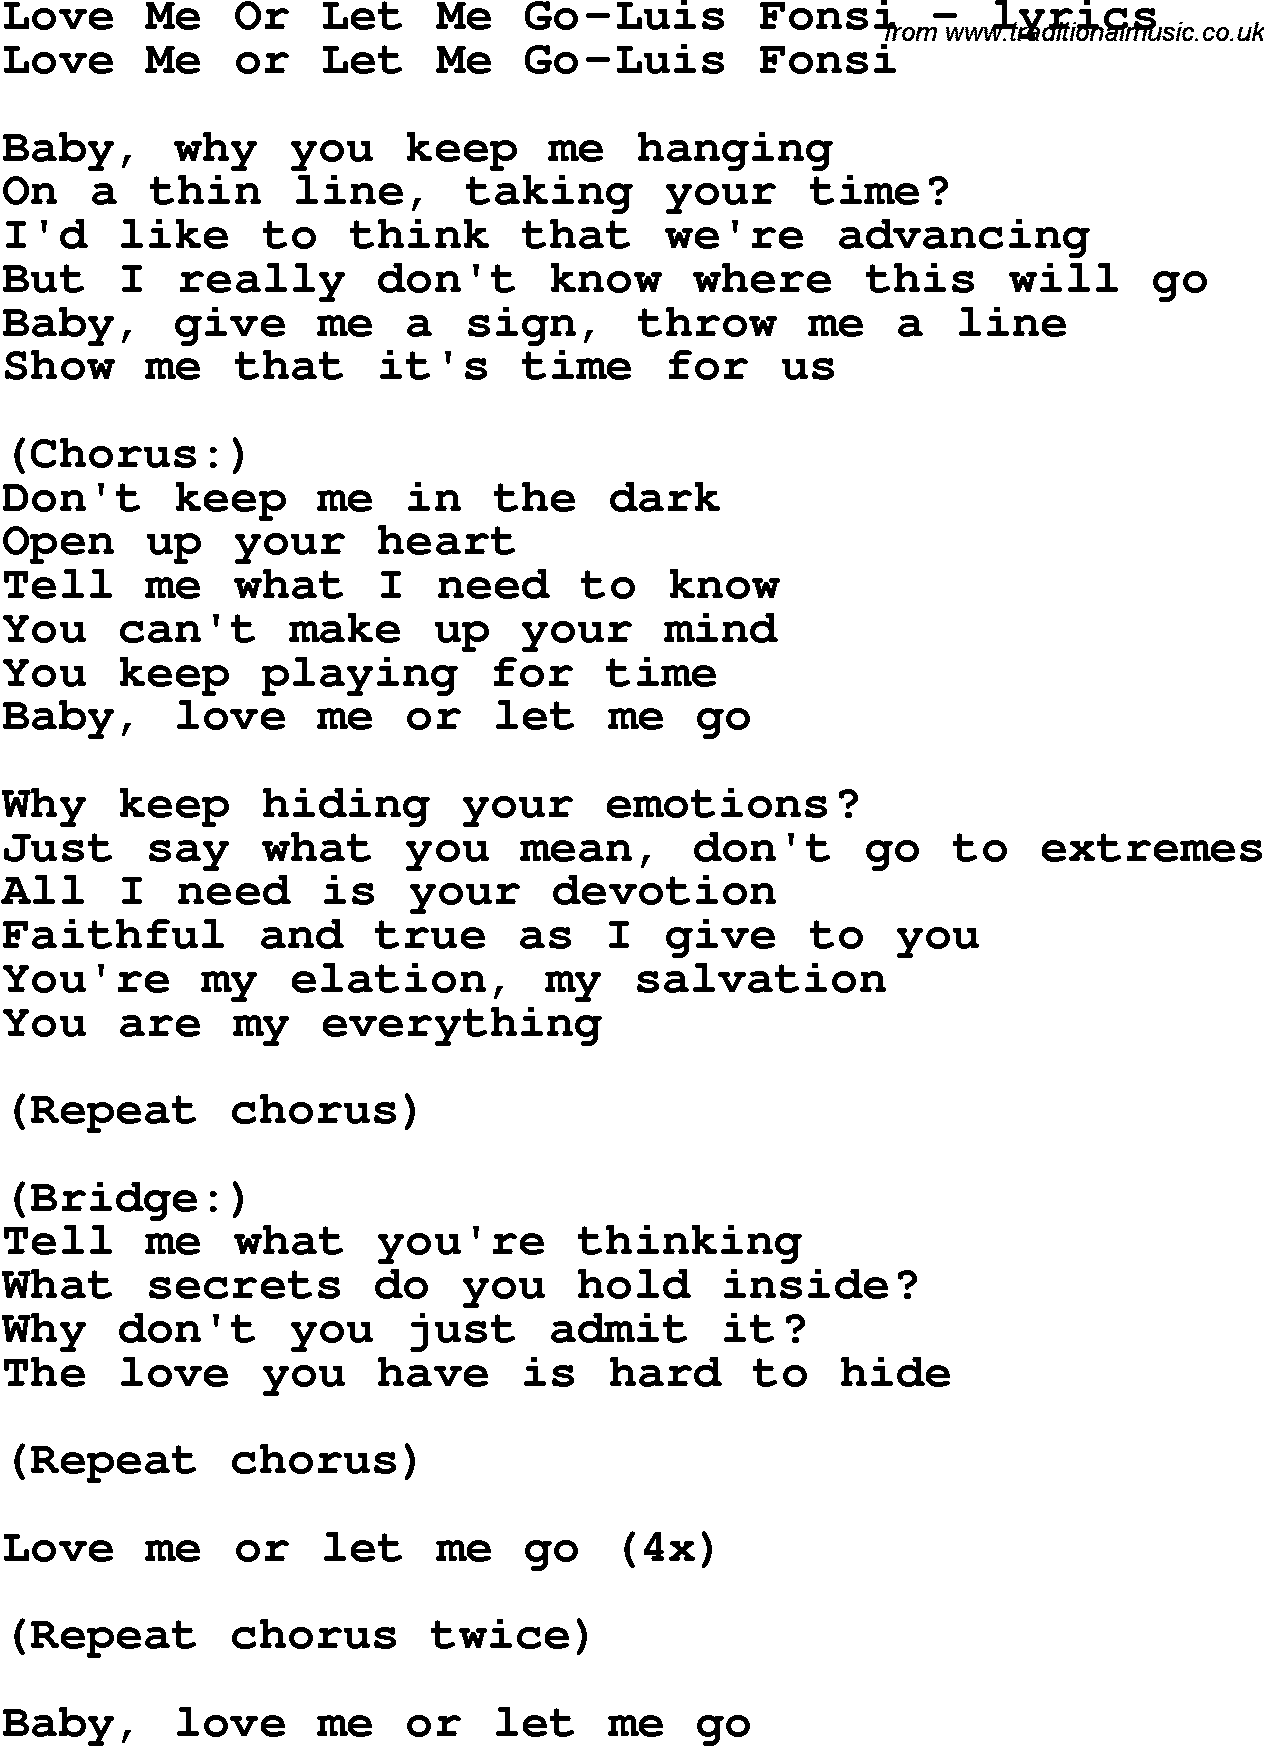 Love Song Lyrics for: Love Me Or Let Me Go-Luis Fonsi